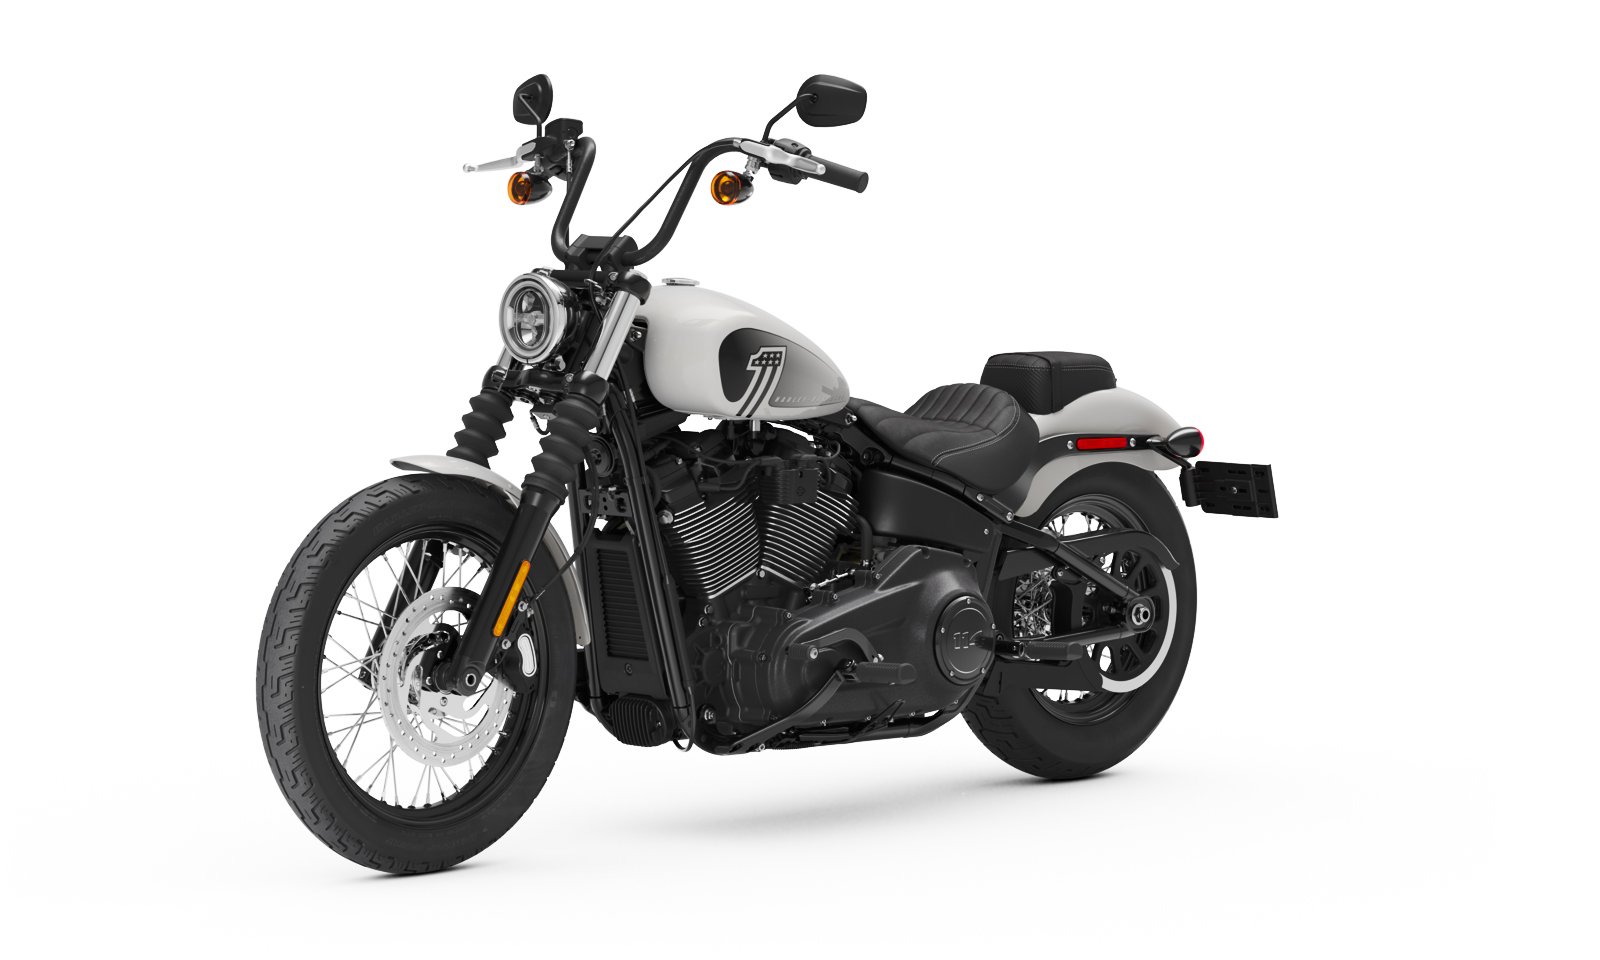 2021 Street Bob Motorcycle Harley Davidson New Zealand